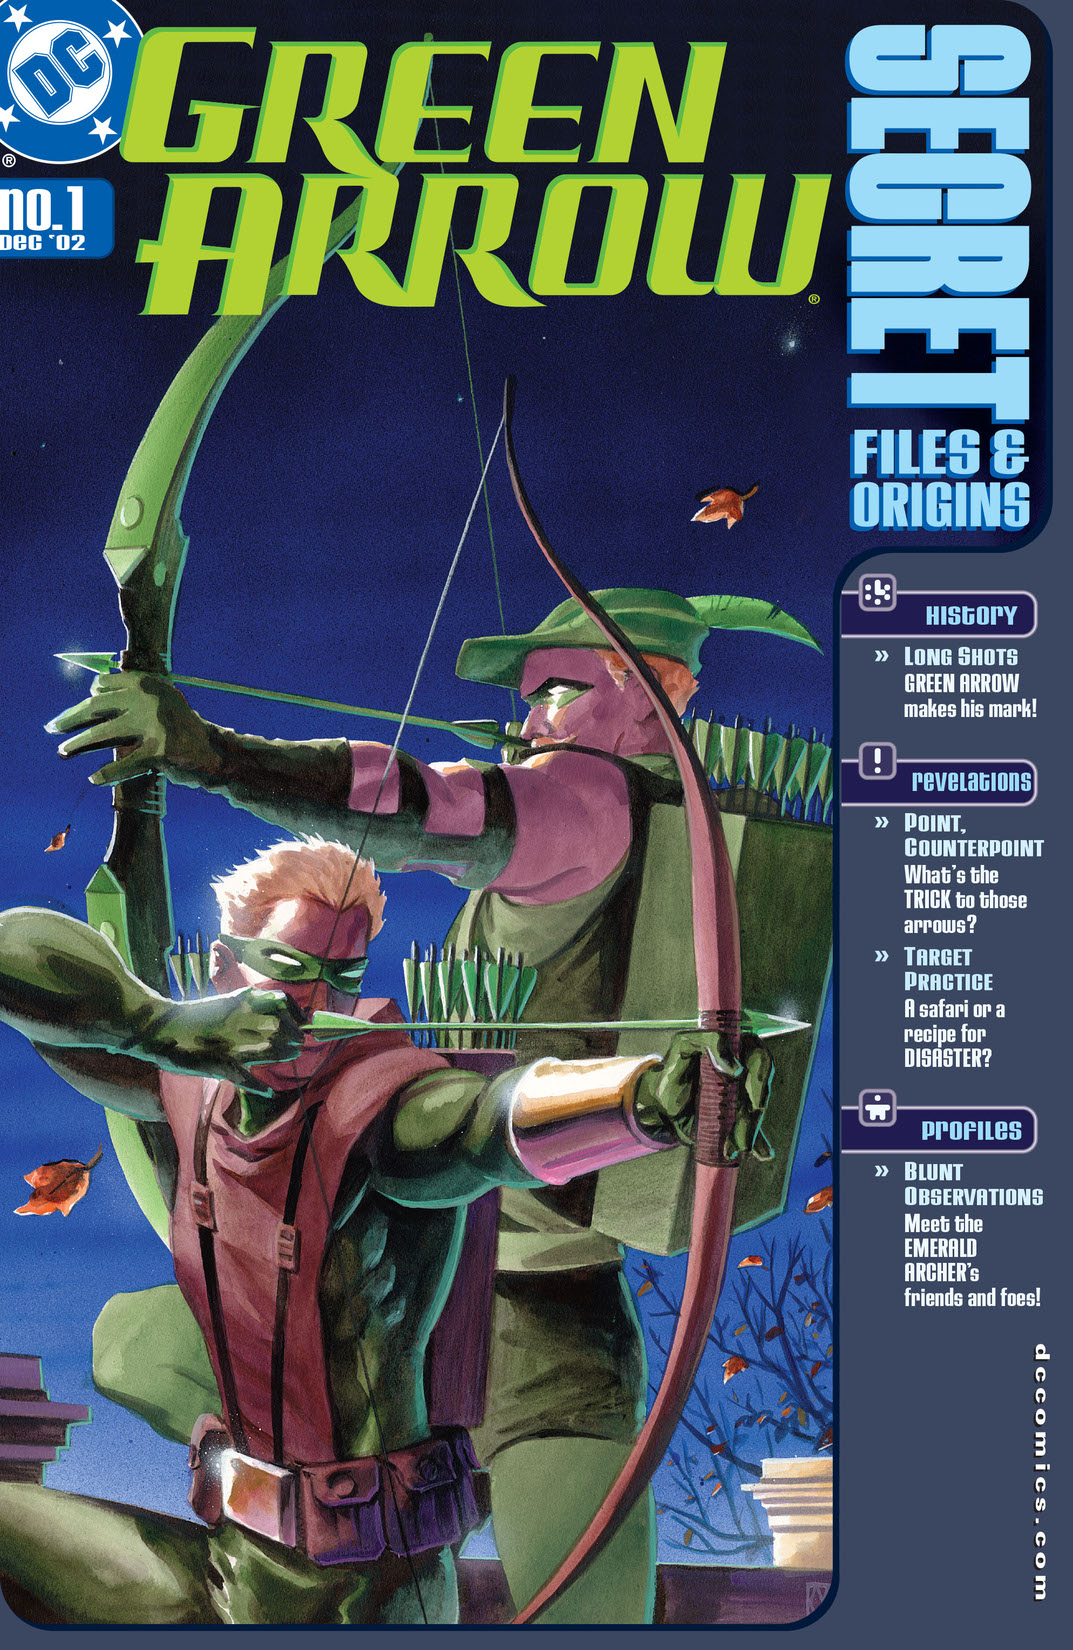 Green Arrow Secret Files & Origins (2002-) #1 preview images